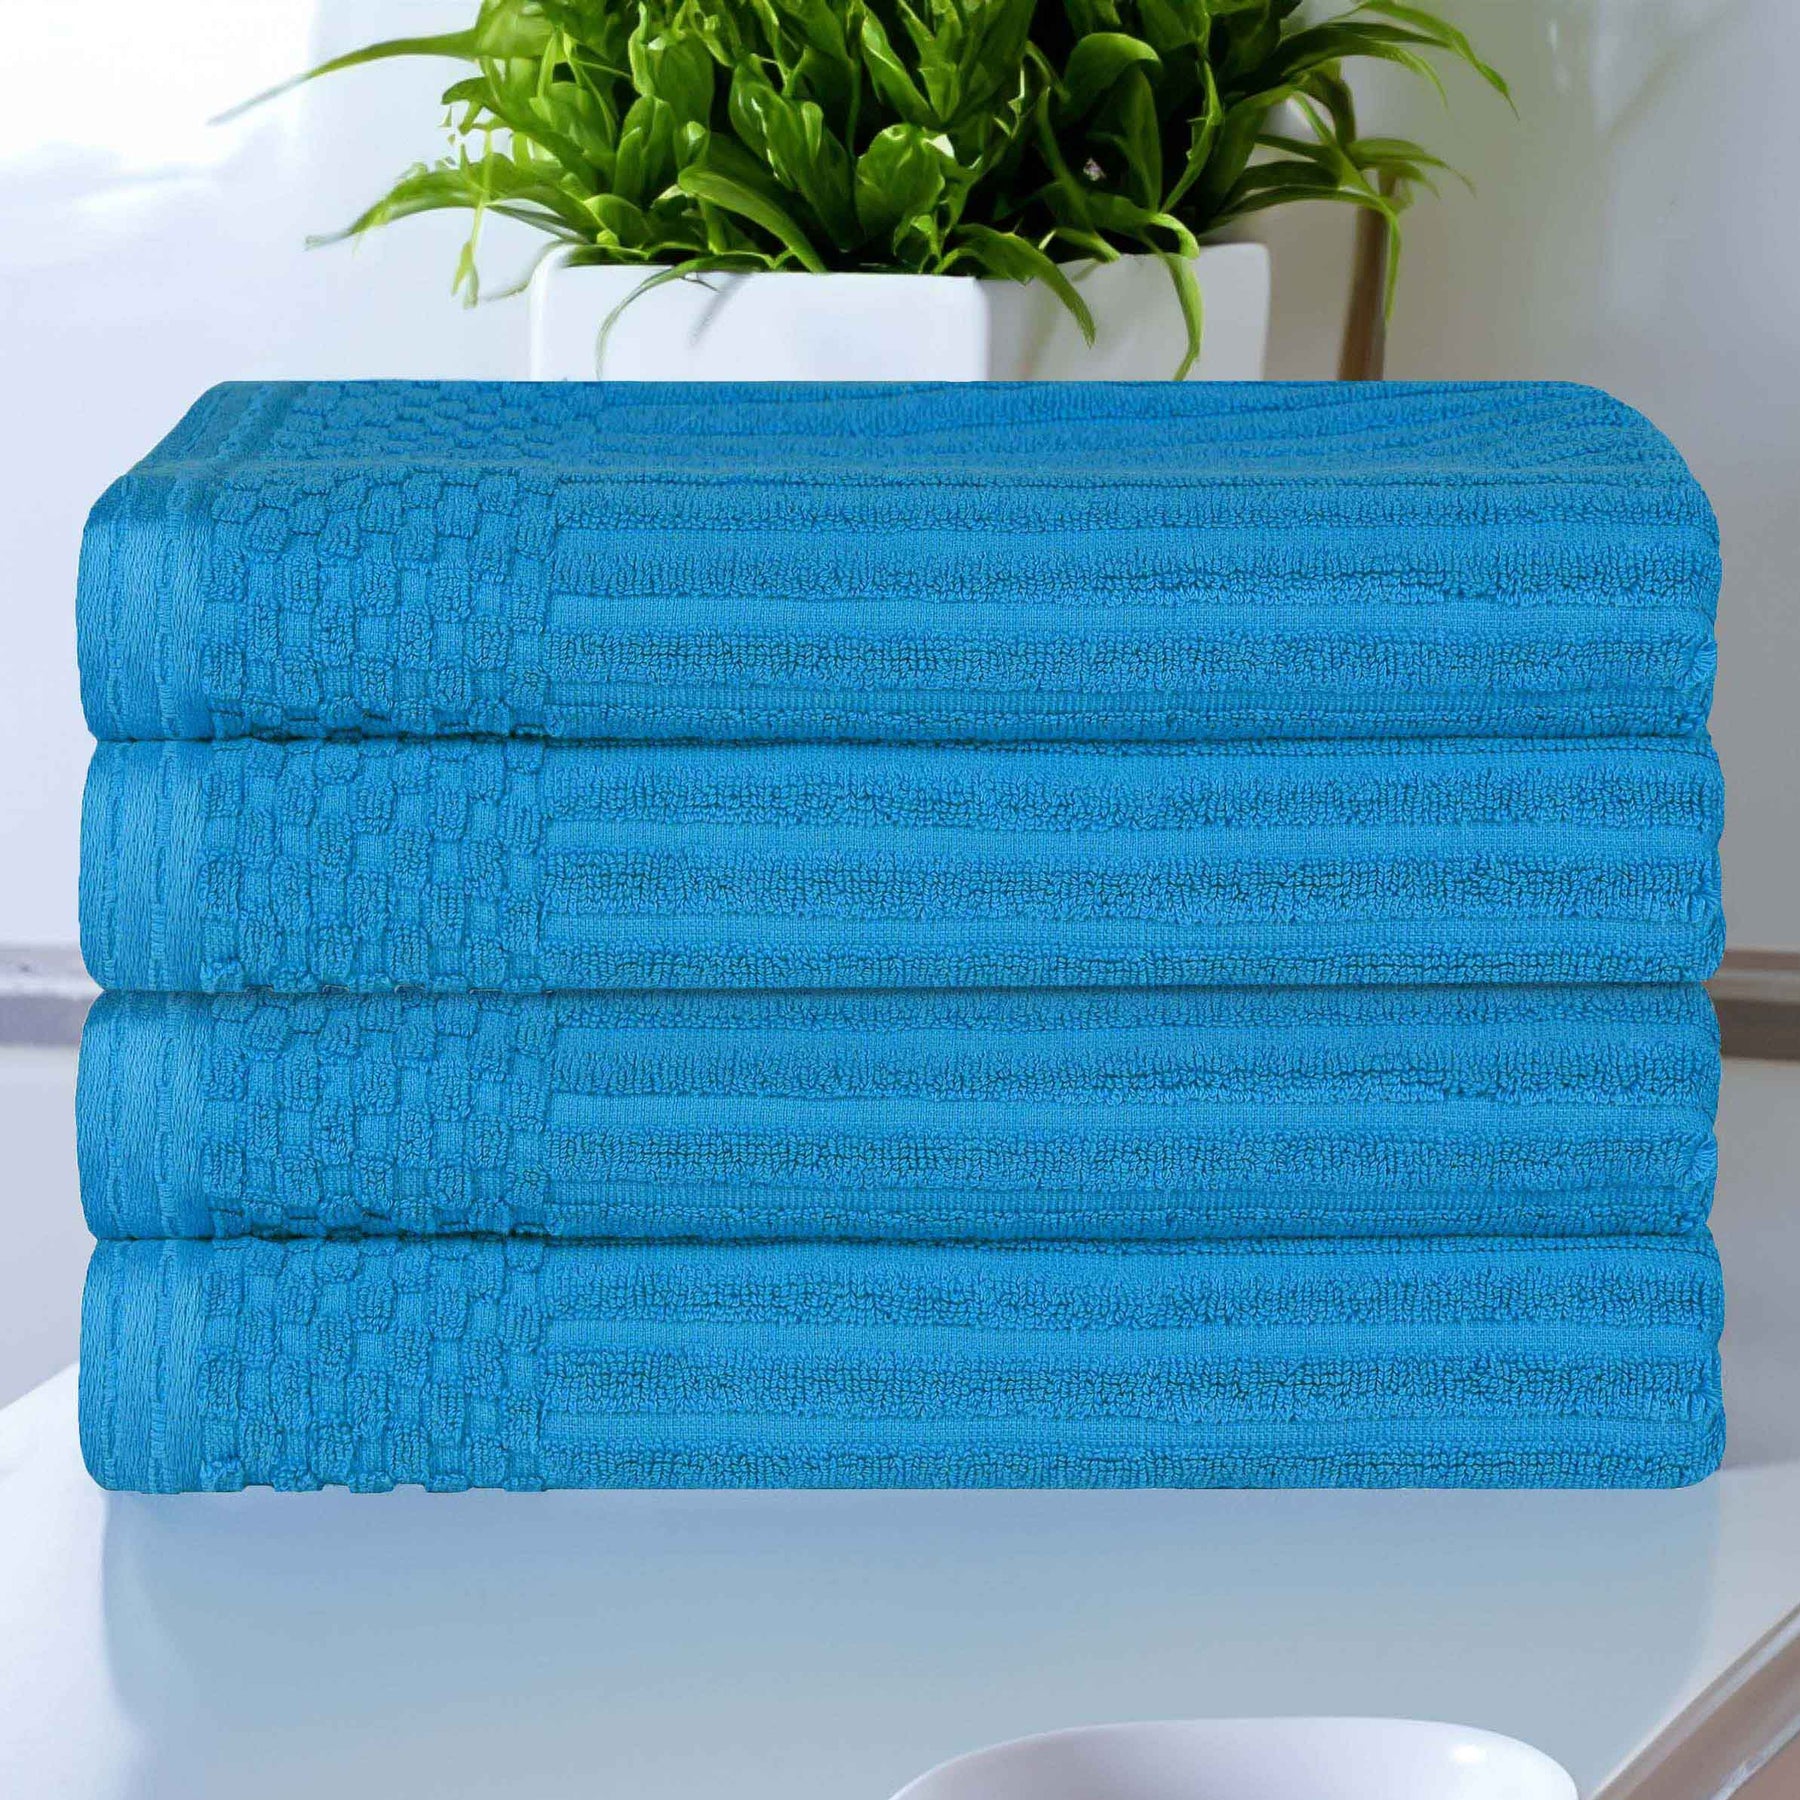 Soho Ribbed Cotton Absorbent Bath Towel Set of 4 - Azure